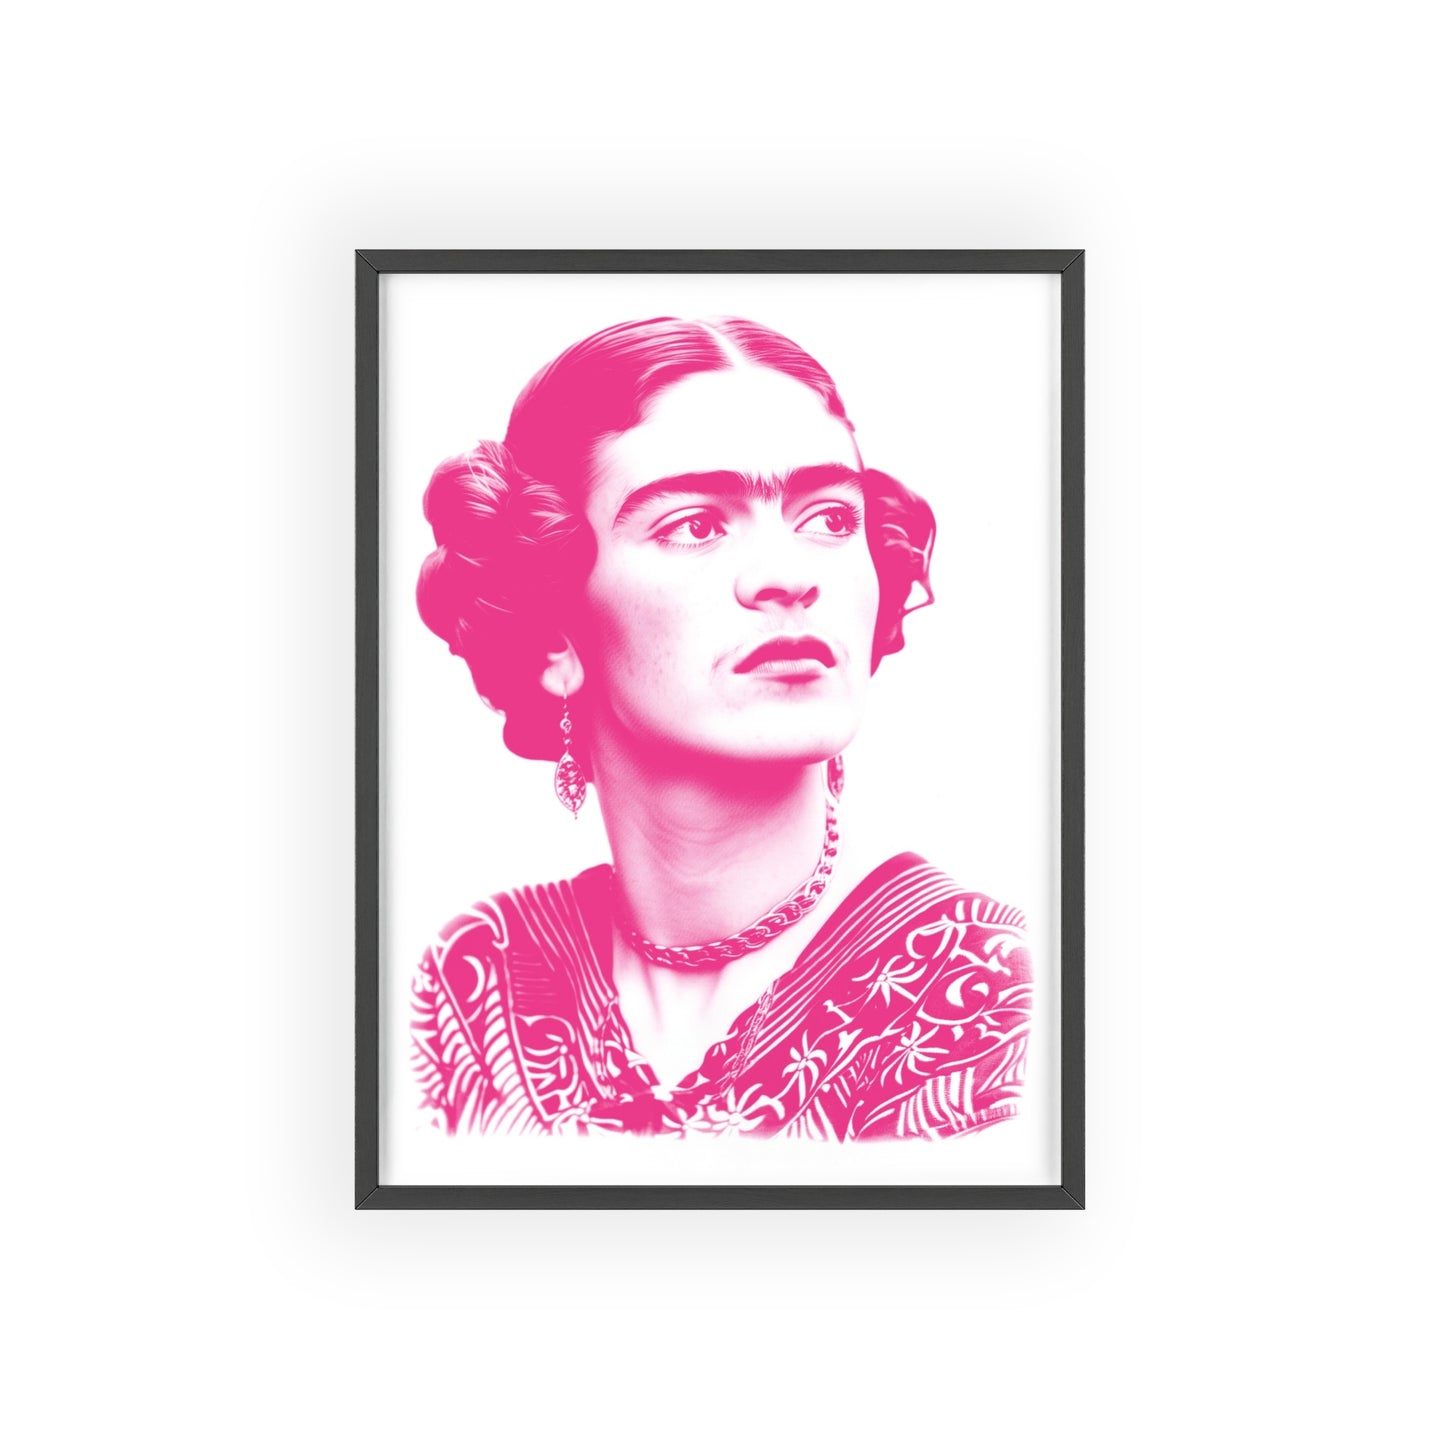 Frida en magenta - Portrait